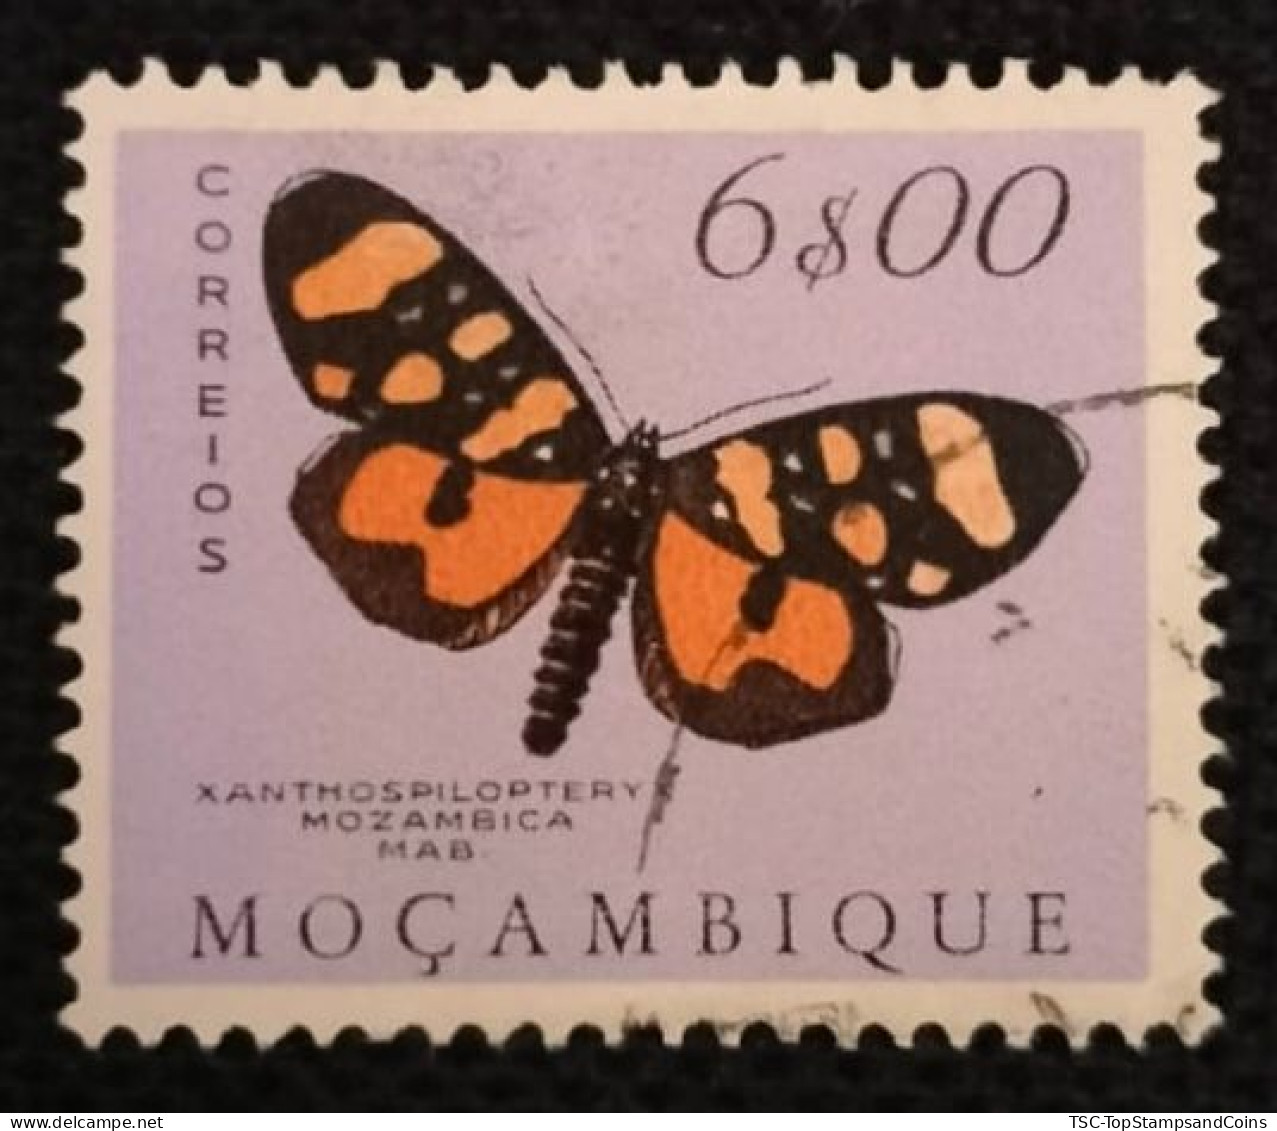 MOZPO0404UC - Mozambique Butterflies - 6$00 Used Stamp - Mozambique - 1953 - Mozambique